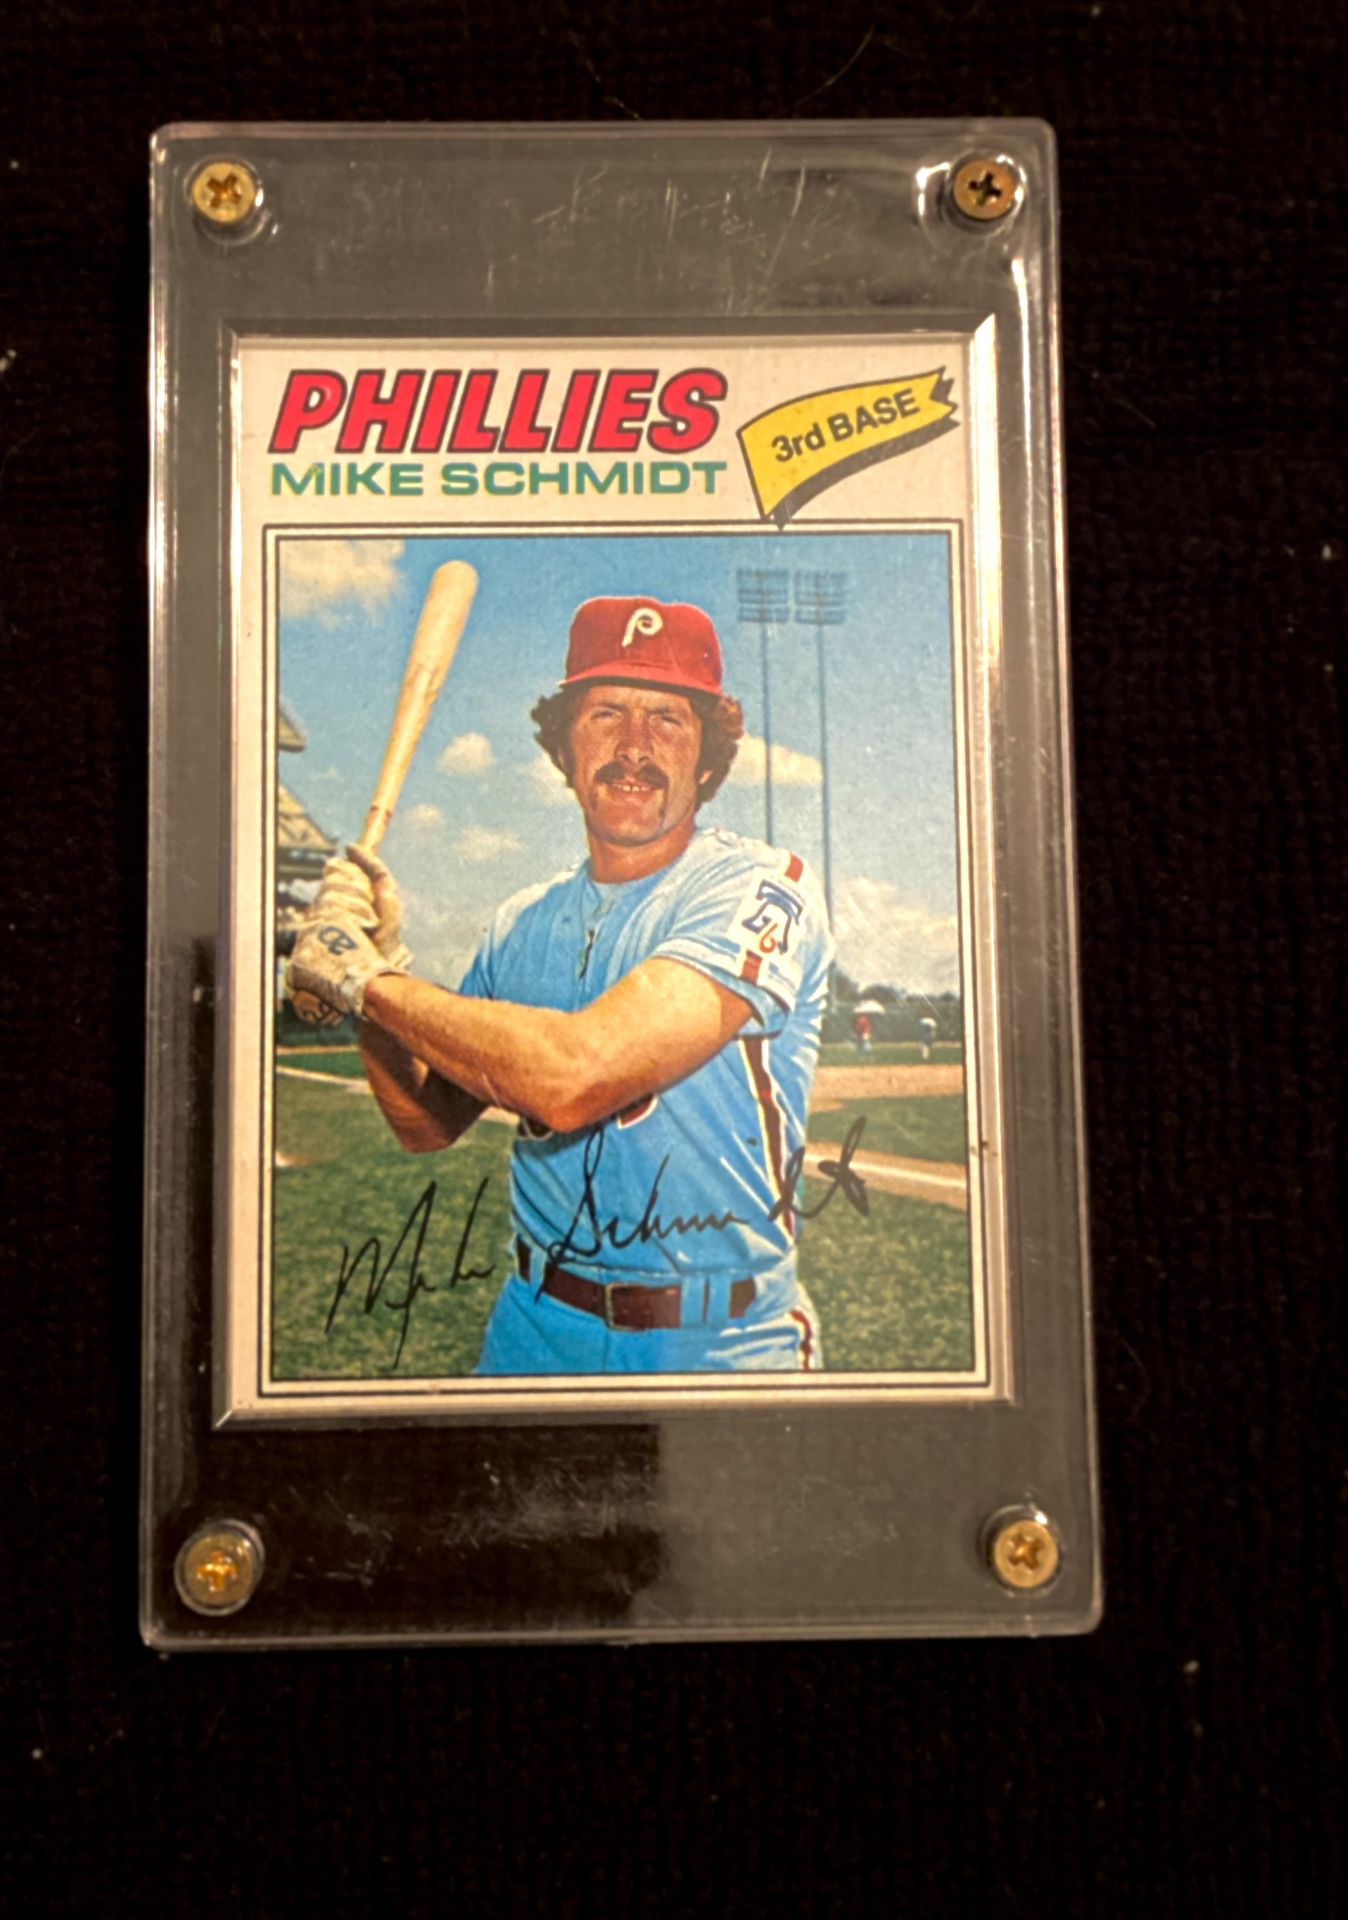 1977 TOPPS Mike Schmidt “Phillies” Card 